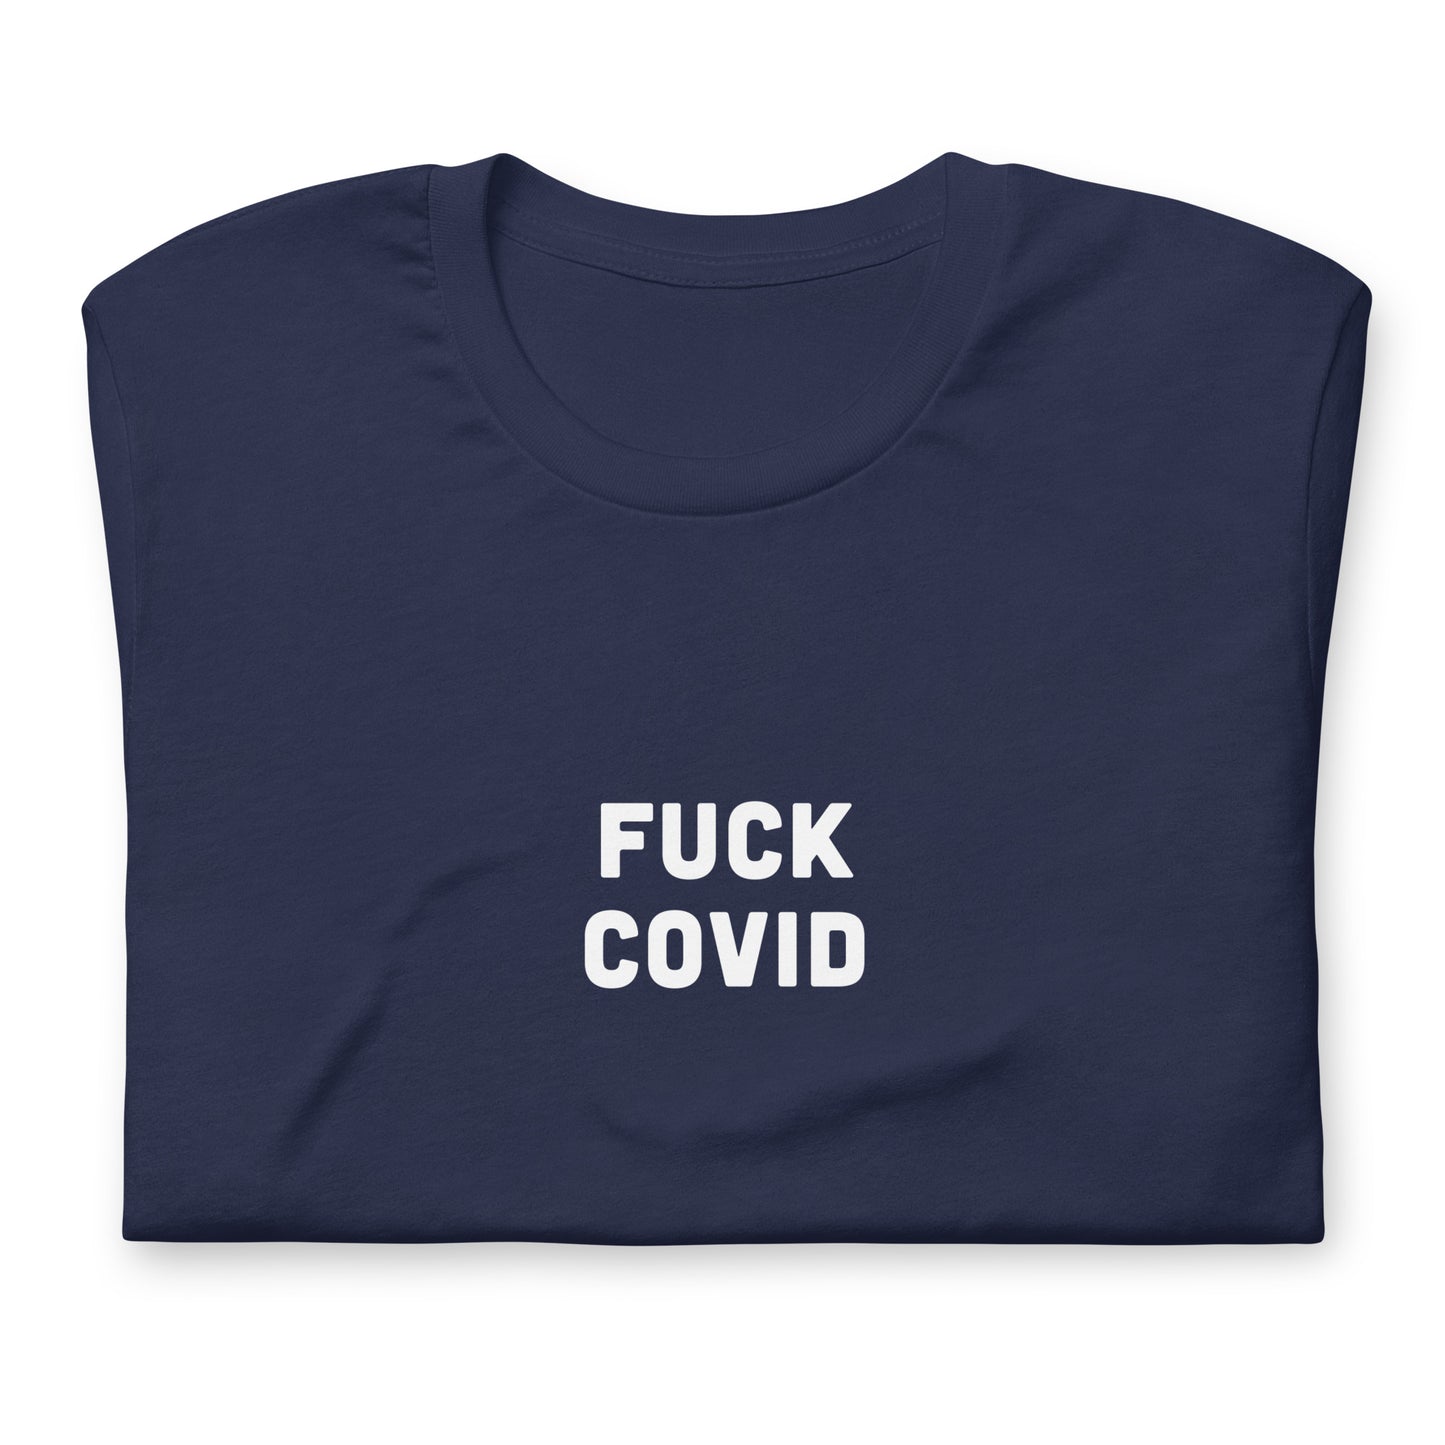 Fuck Covid T-Shirt Size L Color Black